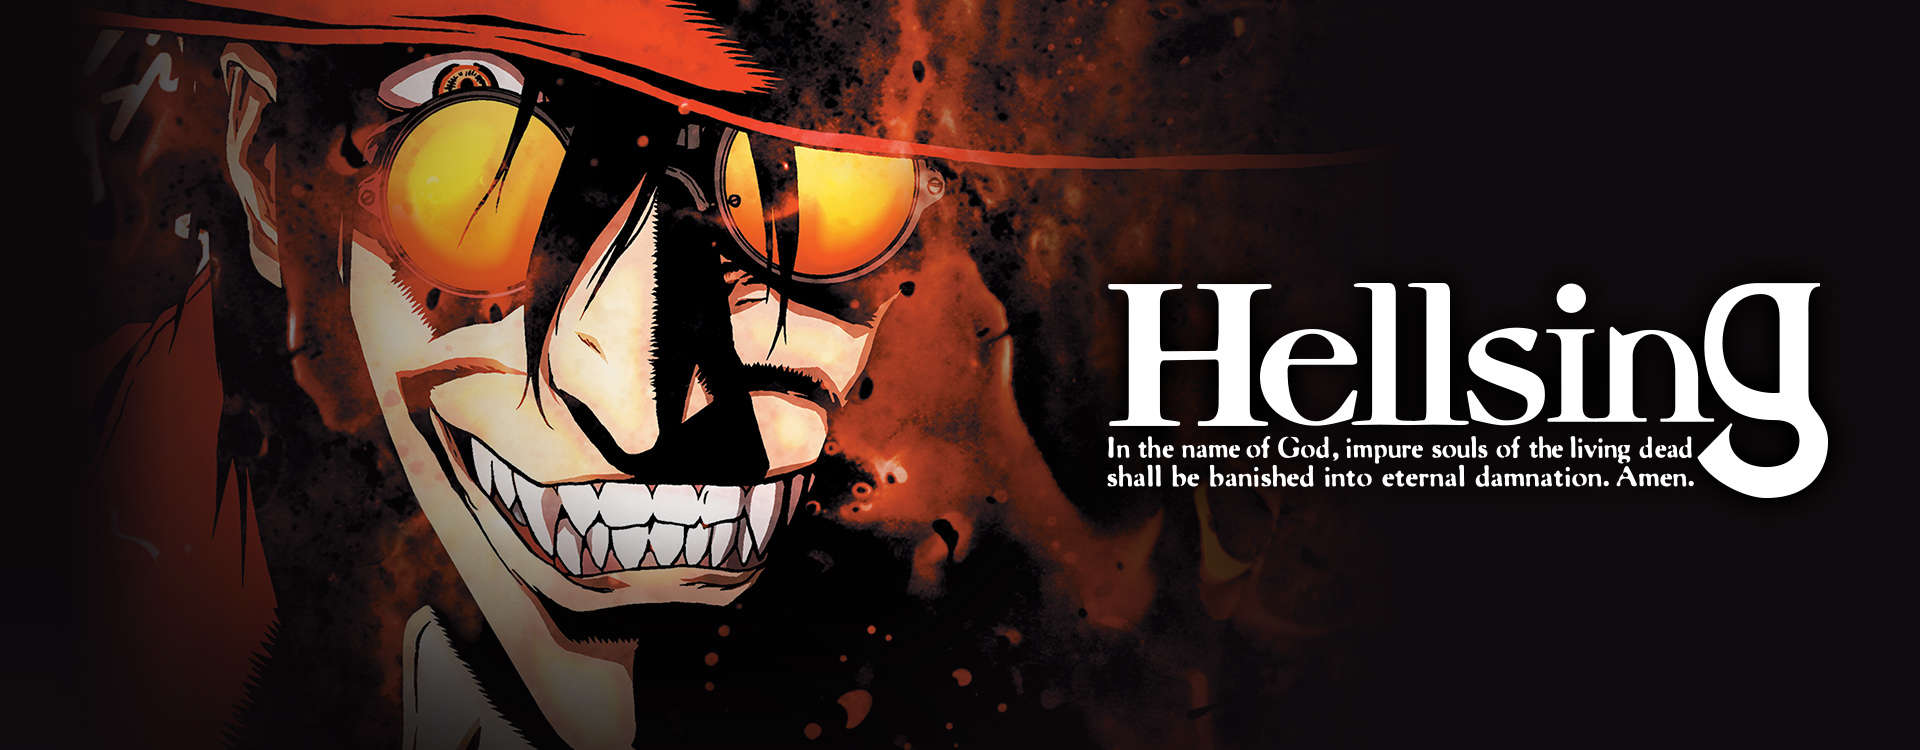 Hellsing Dublado - Episódio 13 - Animes Online